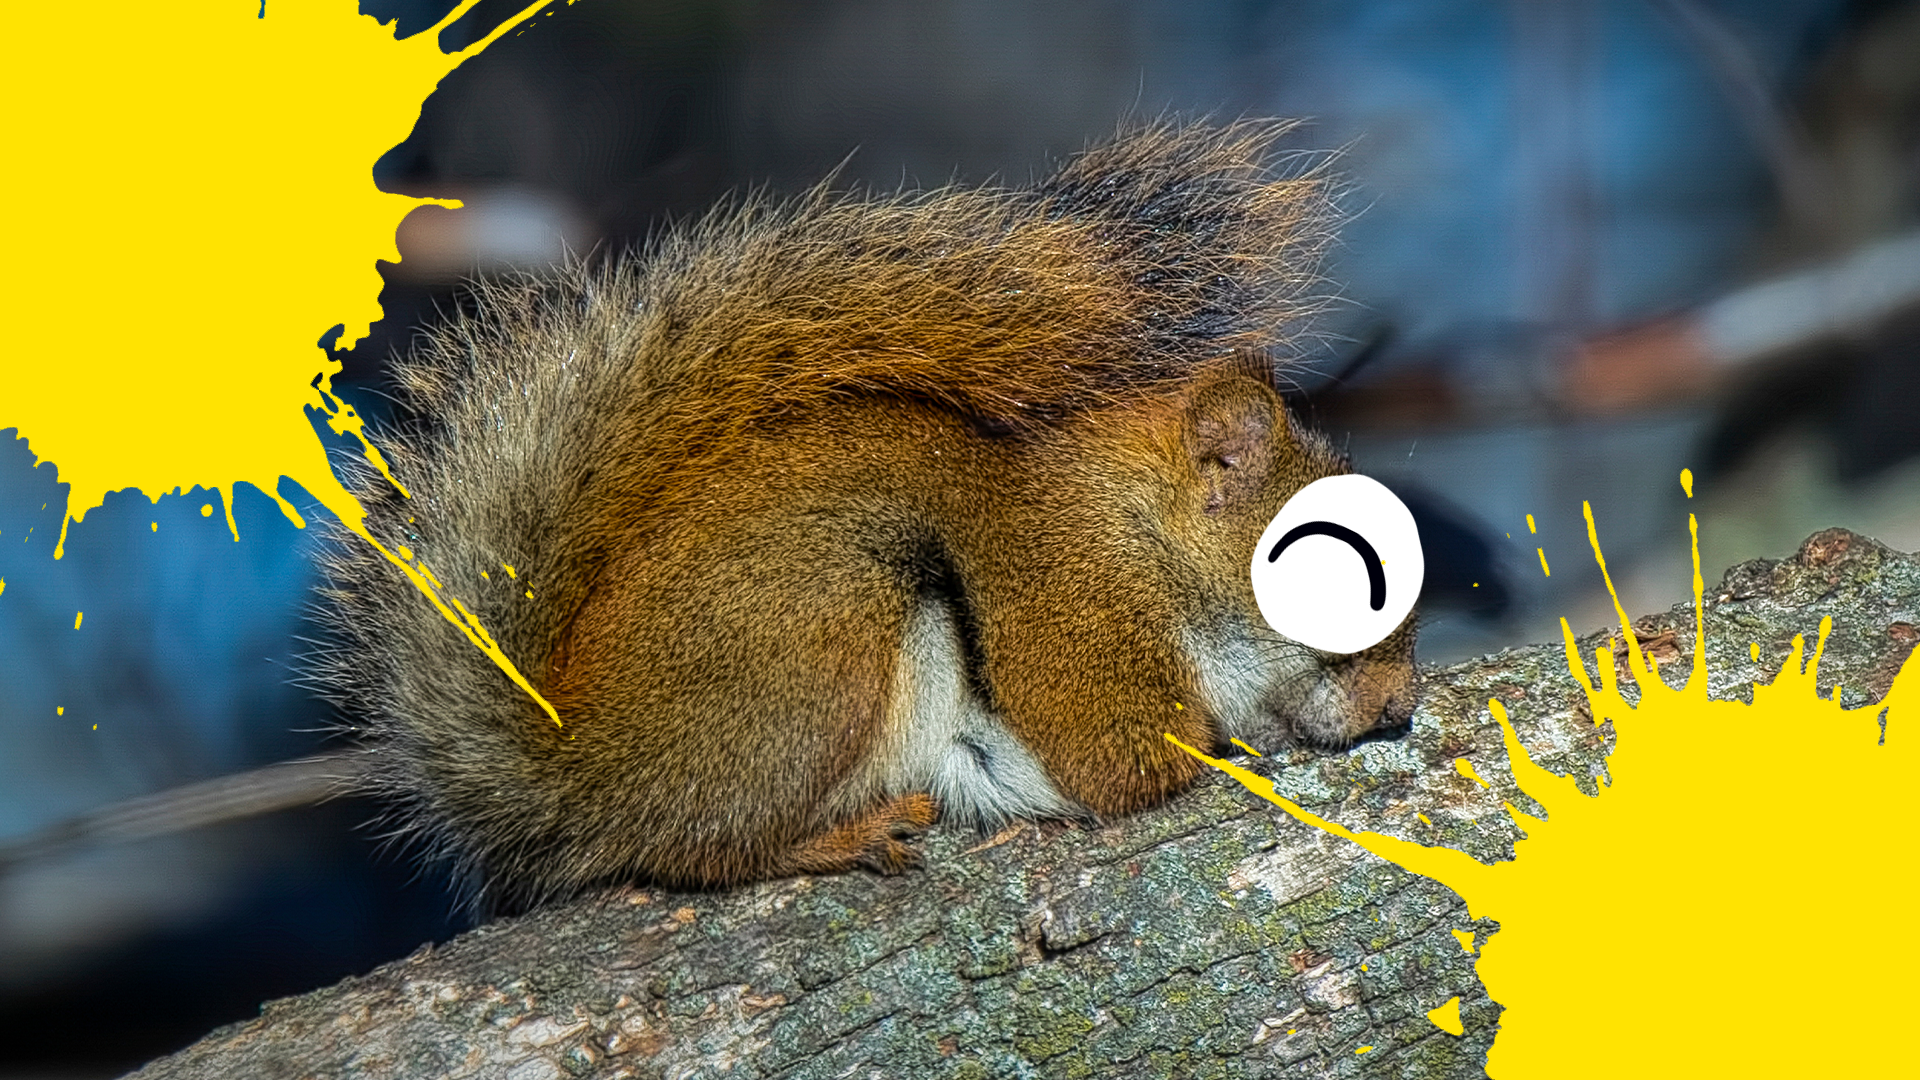 Sleepy squirrel with splats